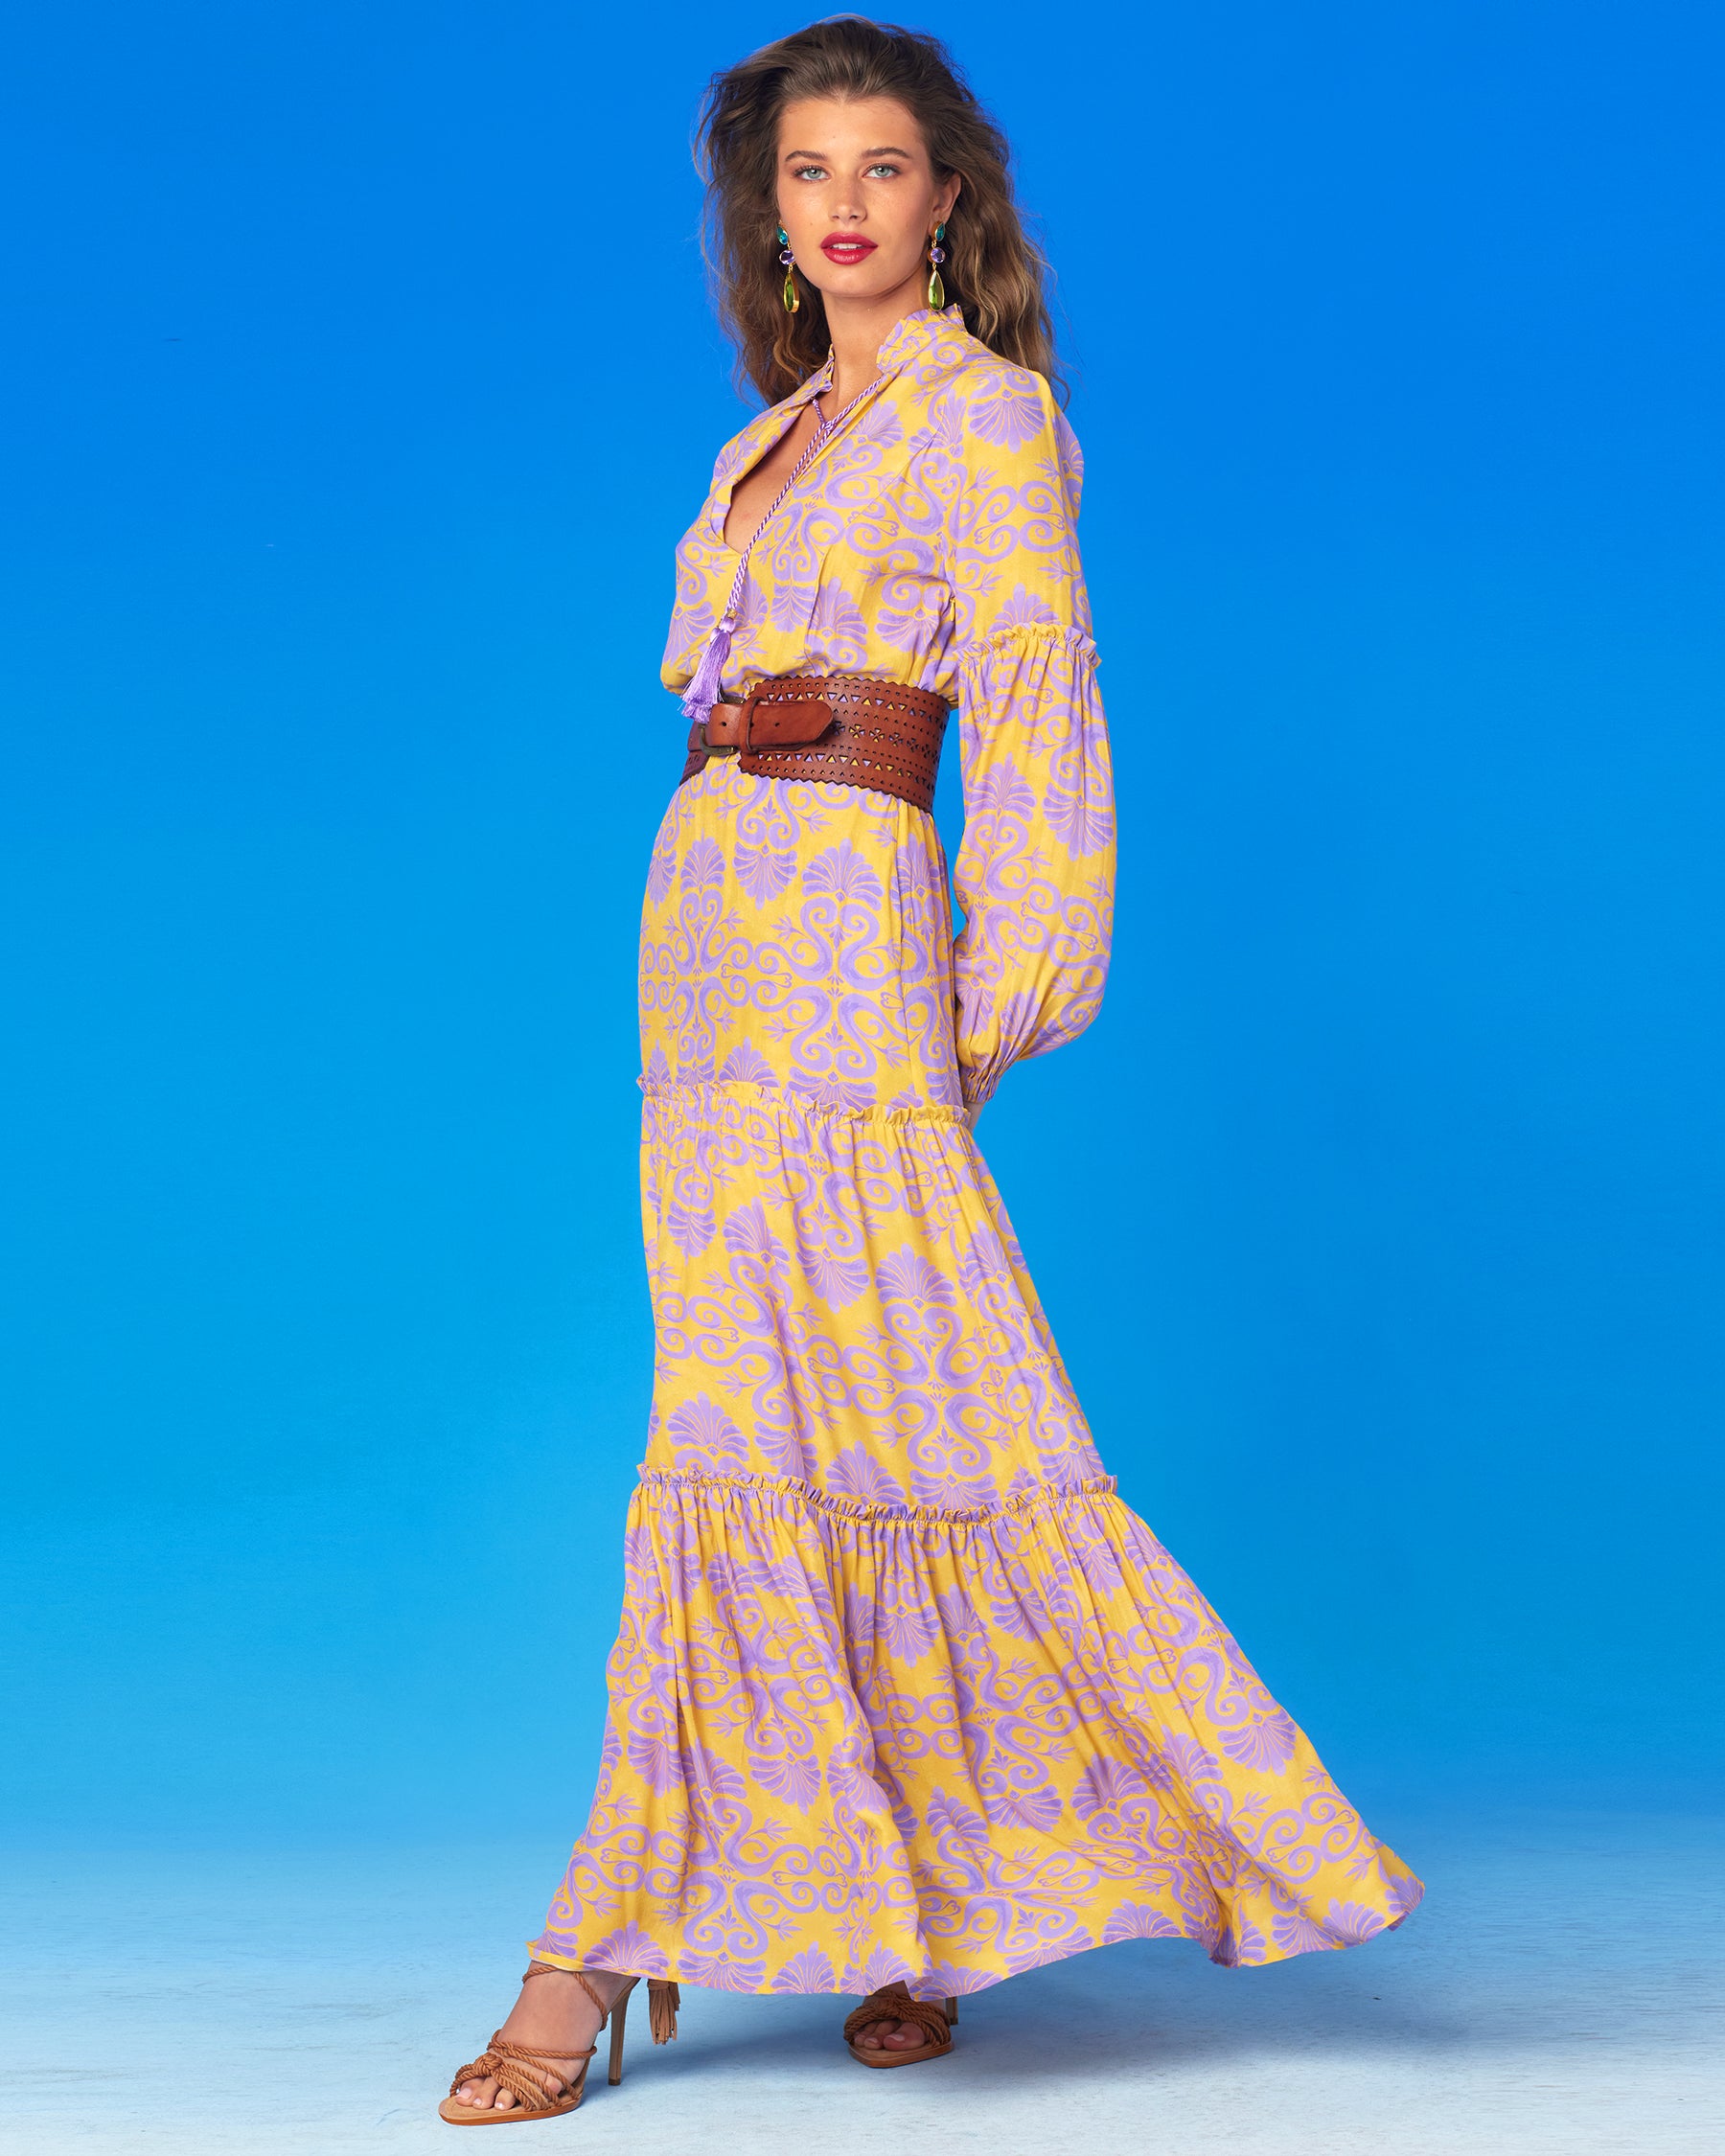 Sabina Maxi Dress in Mediterranean Swirl Motif with wind blowing the skirt